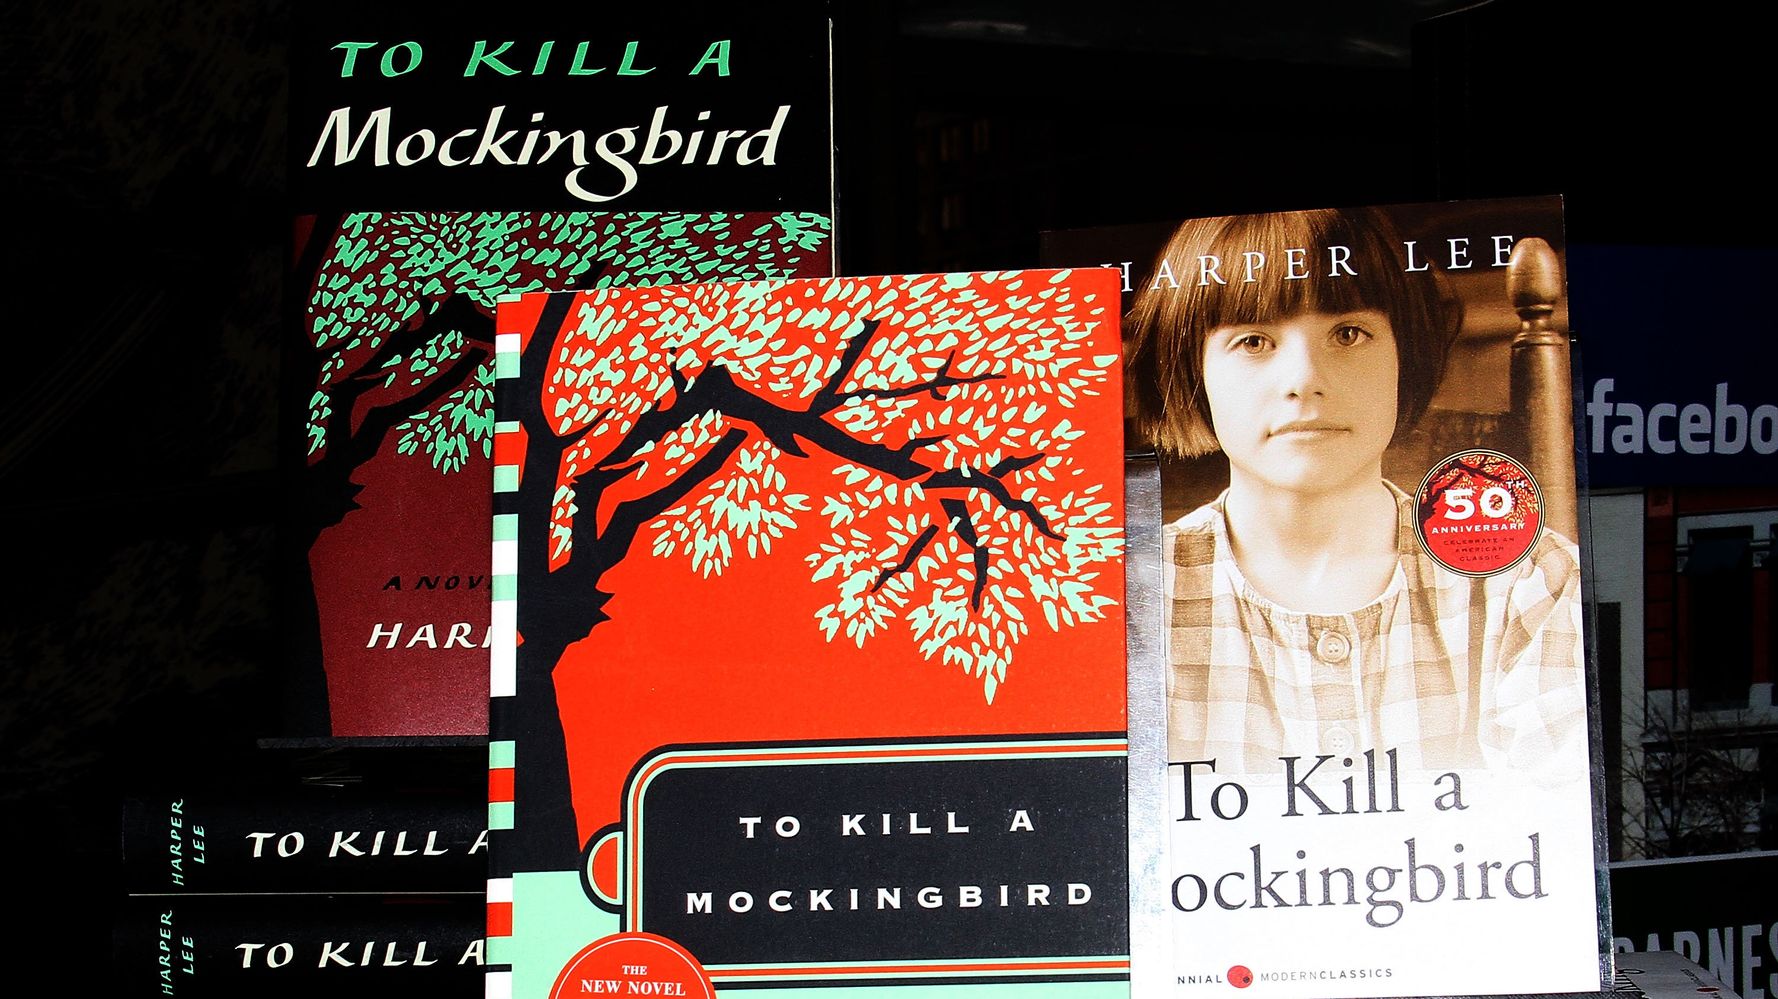 Harper Lee: The Impact of 'To Kill a Mockingbird' - ABC News